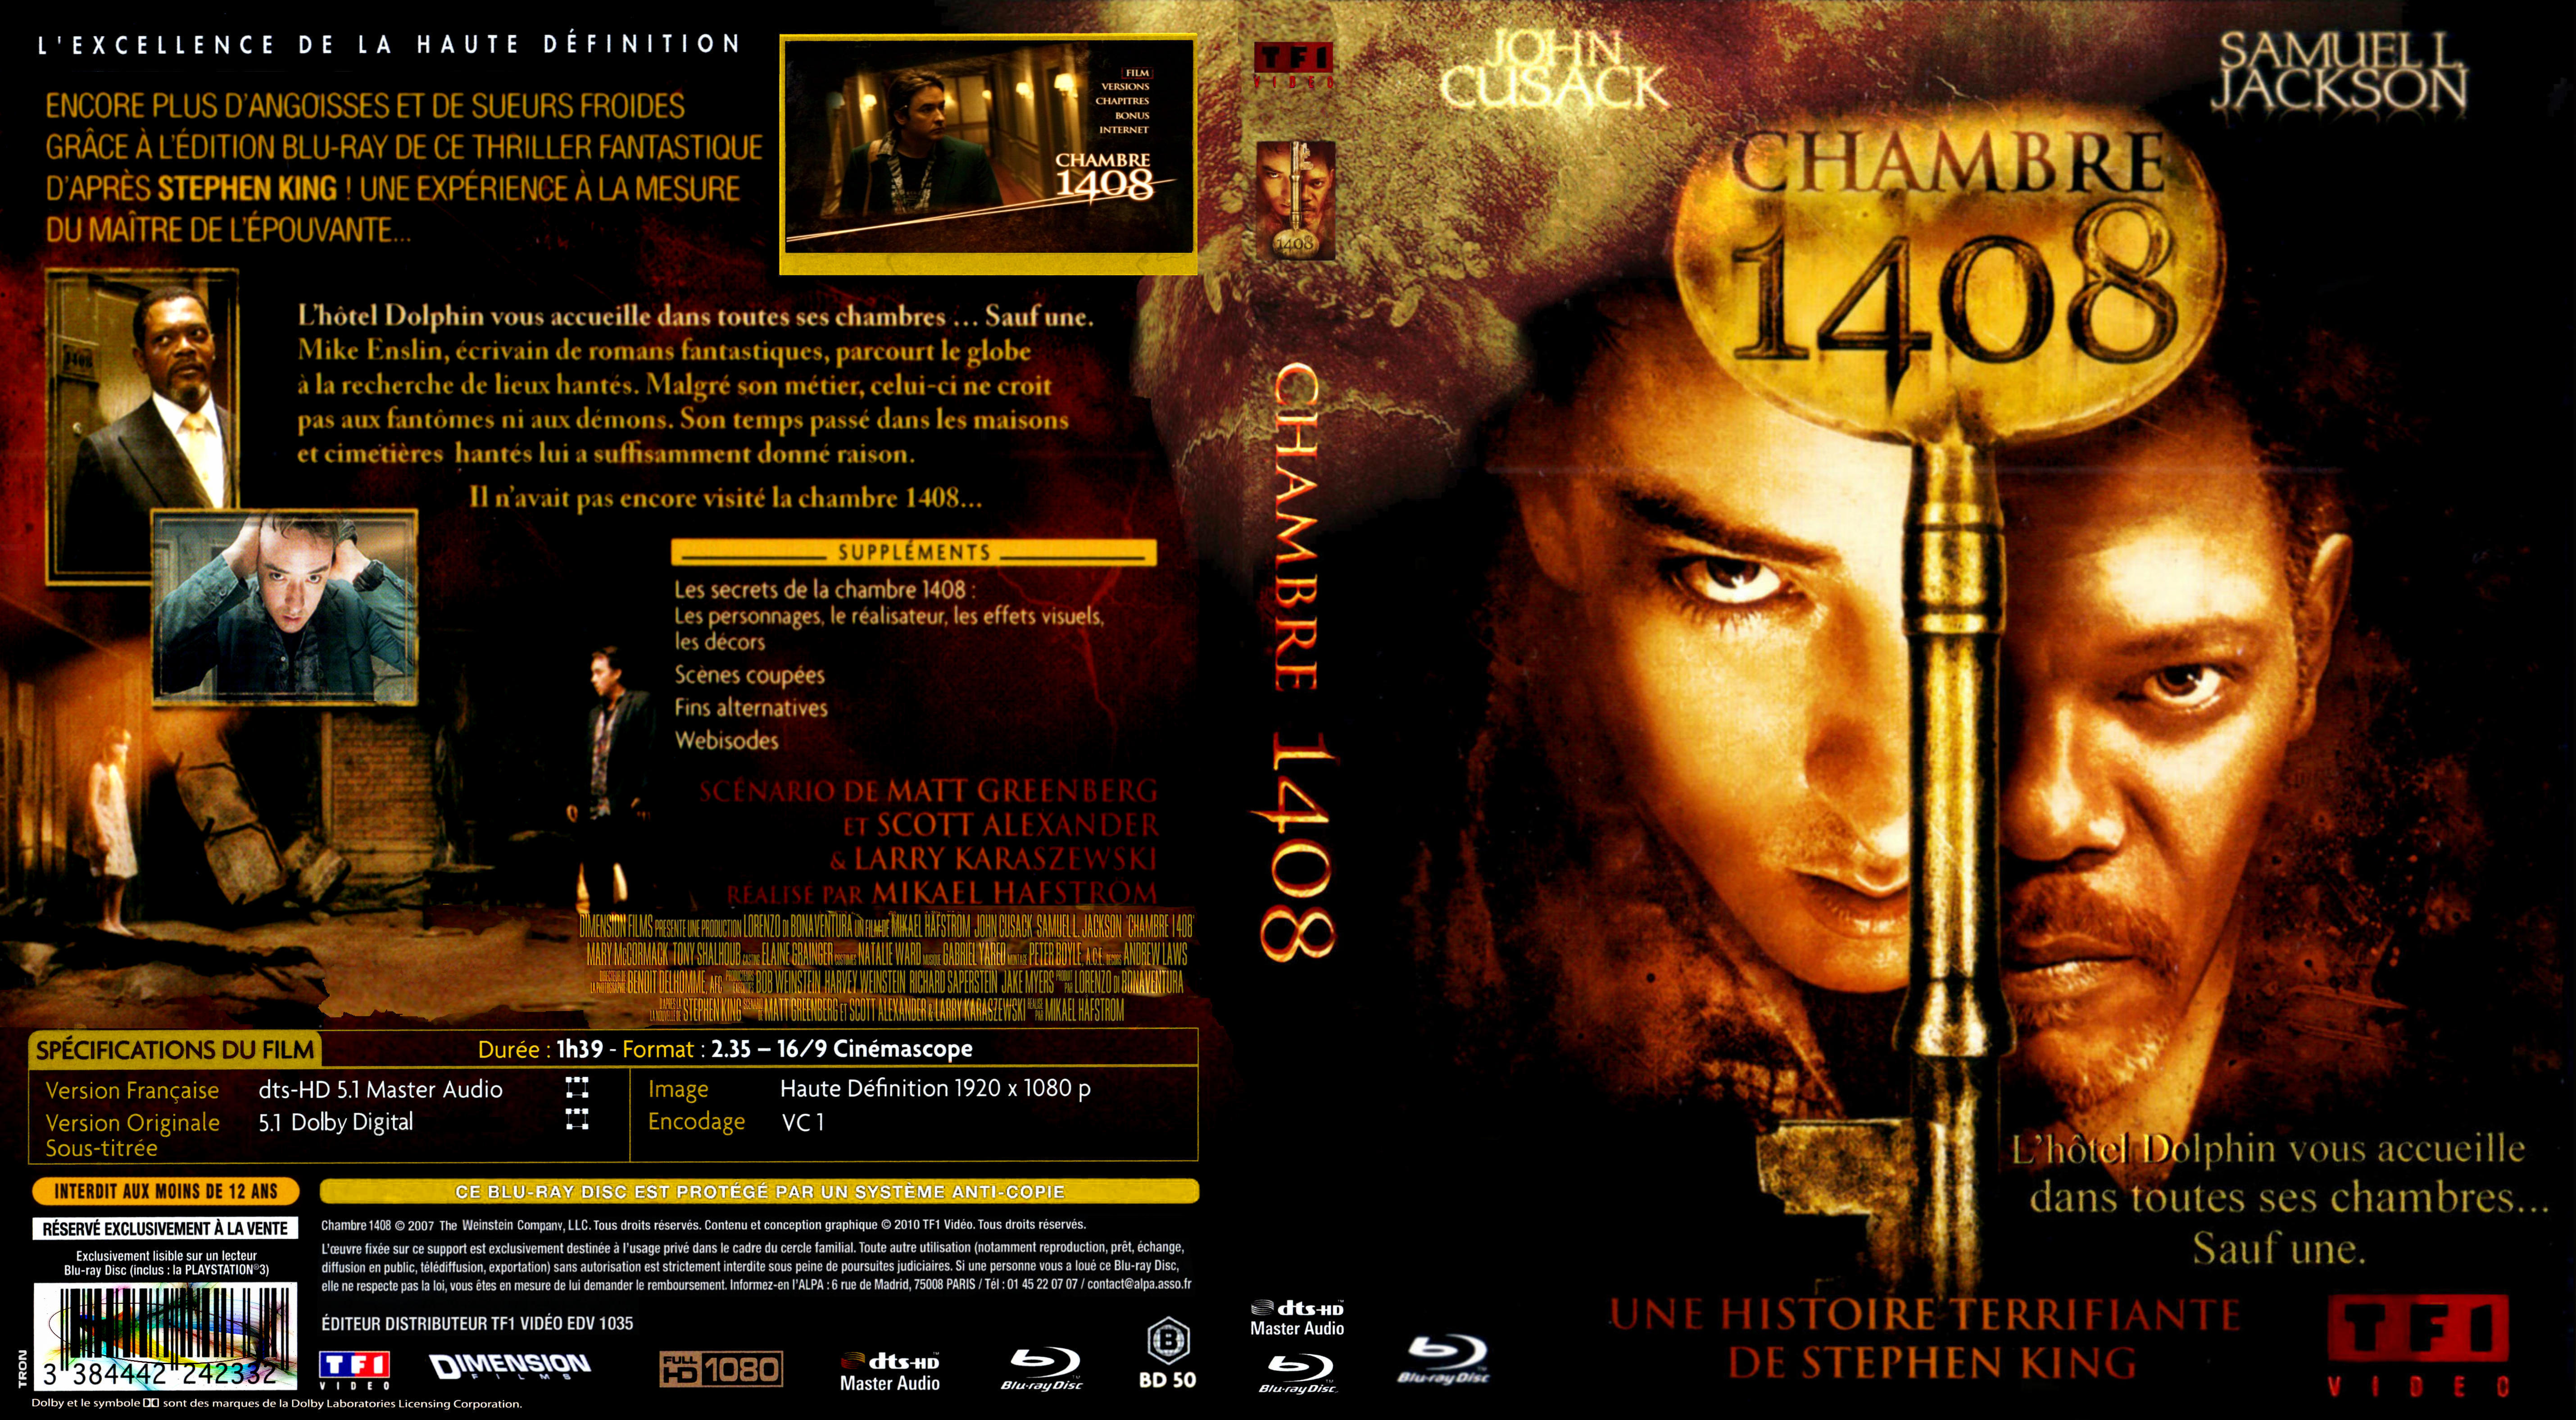 Jaquette DVD Chambre 1408 custom (BLU-RAY)